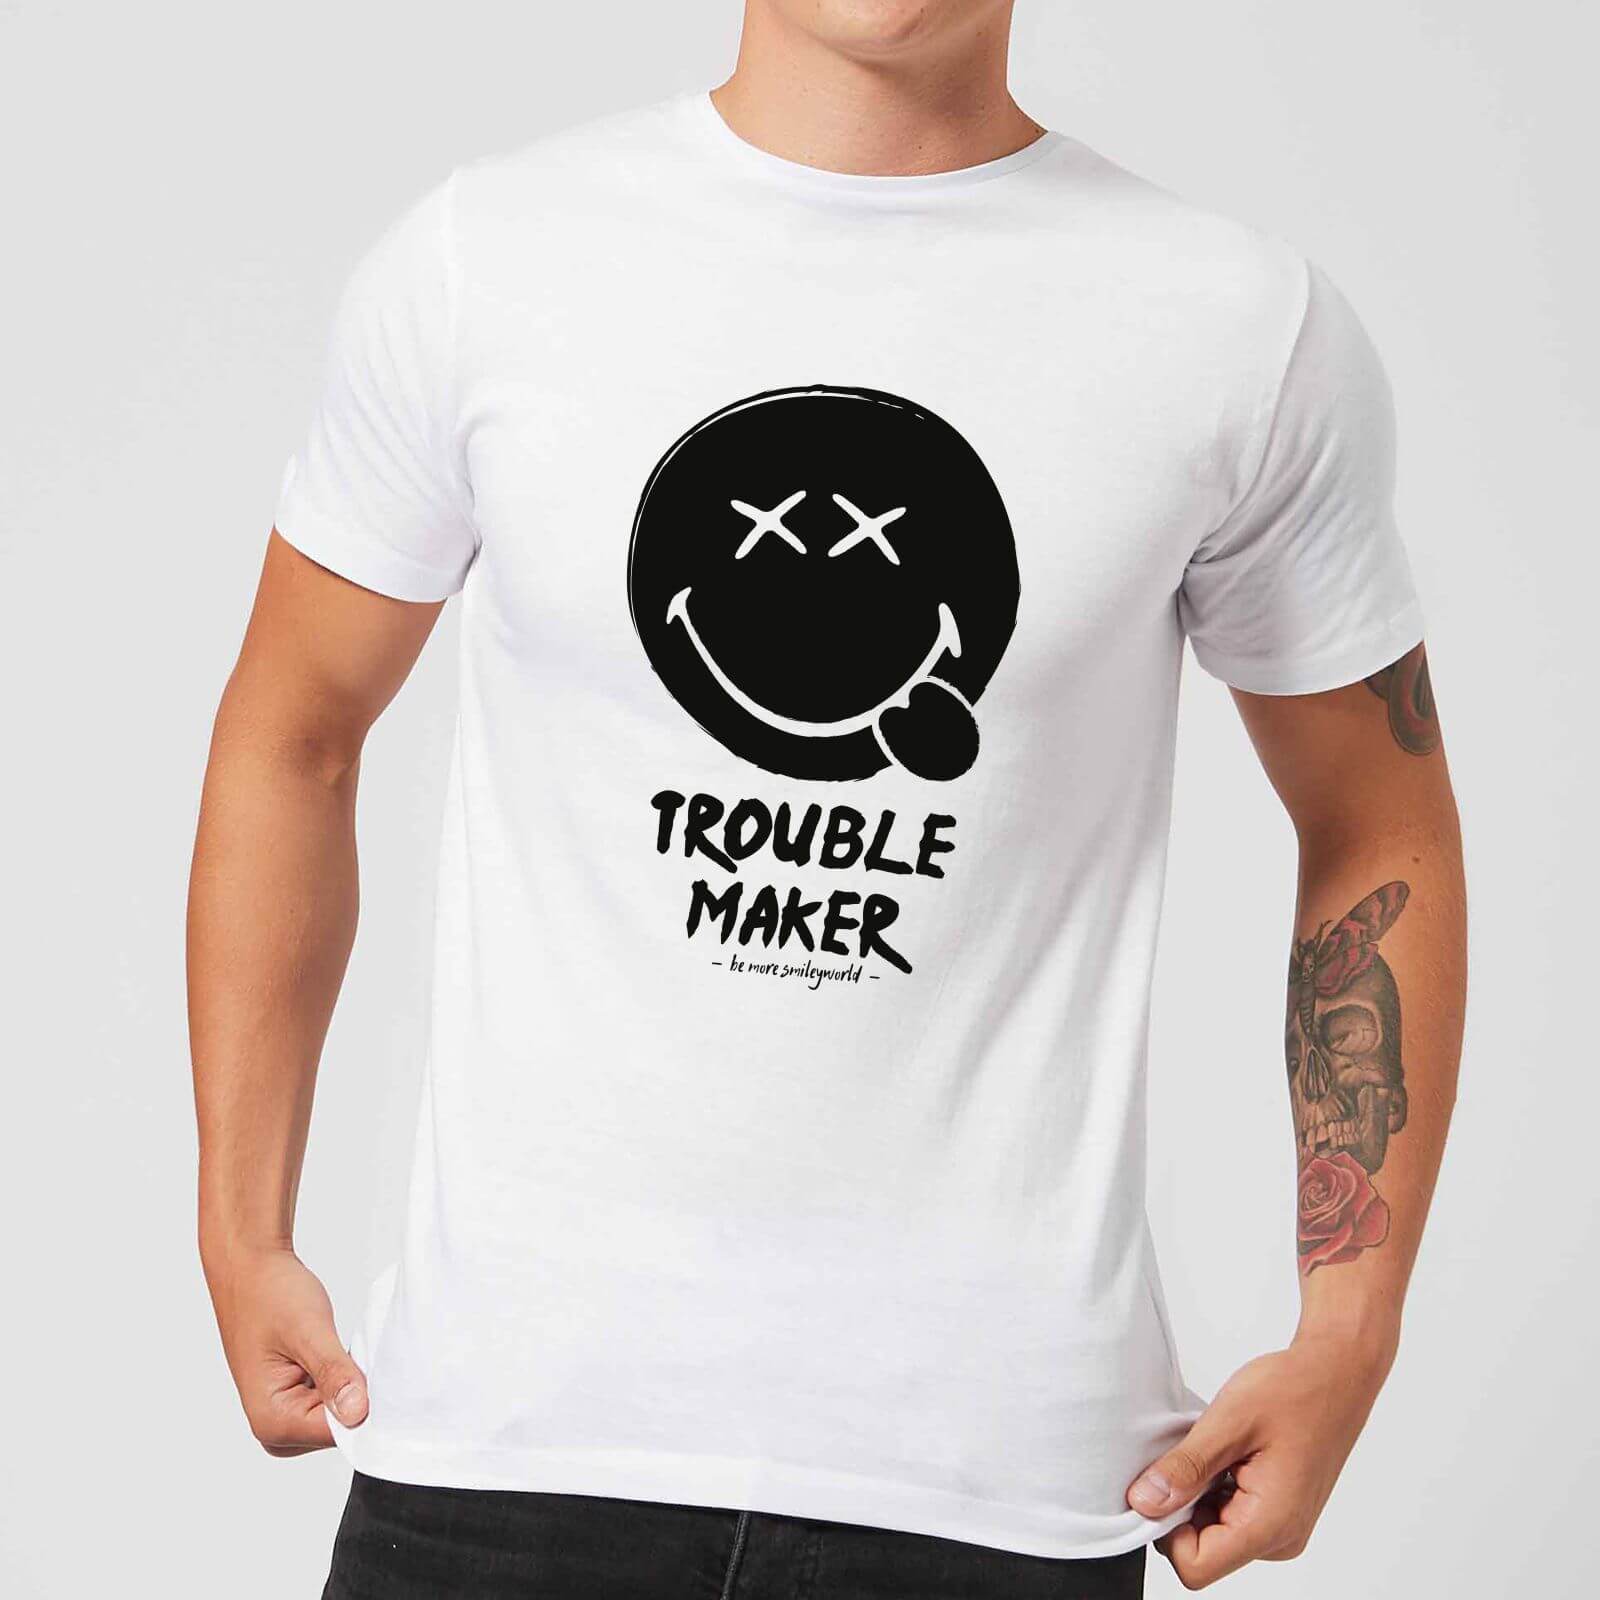 Trouble Maker Men's T-Shirt - White - S - White